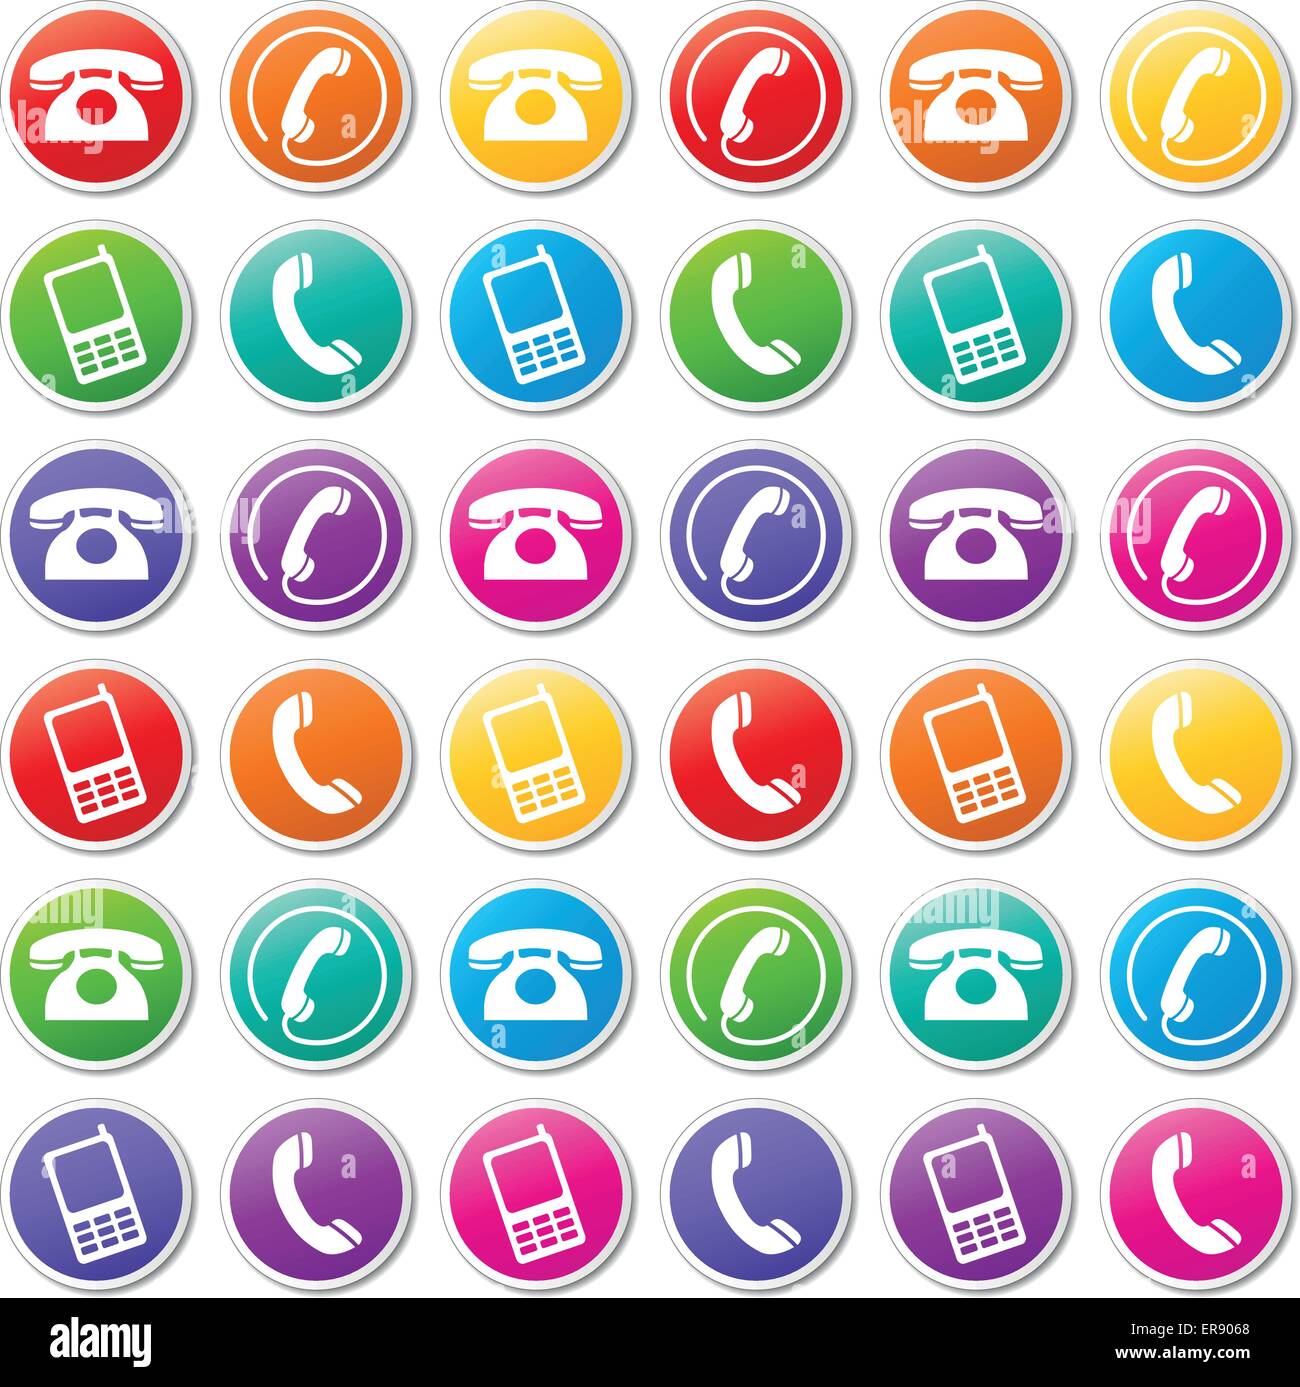 Vektor-Illustration von verschiedenen bunten Telefon icons Stock Vektor